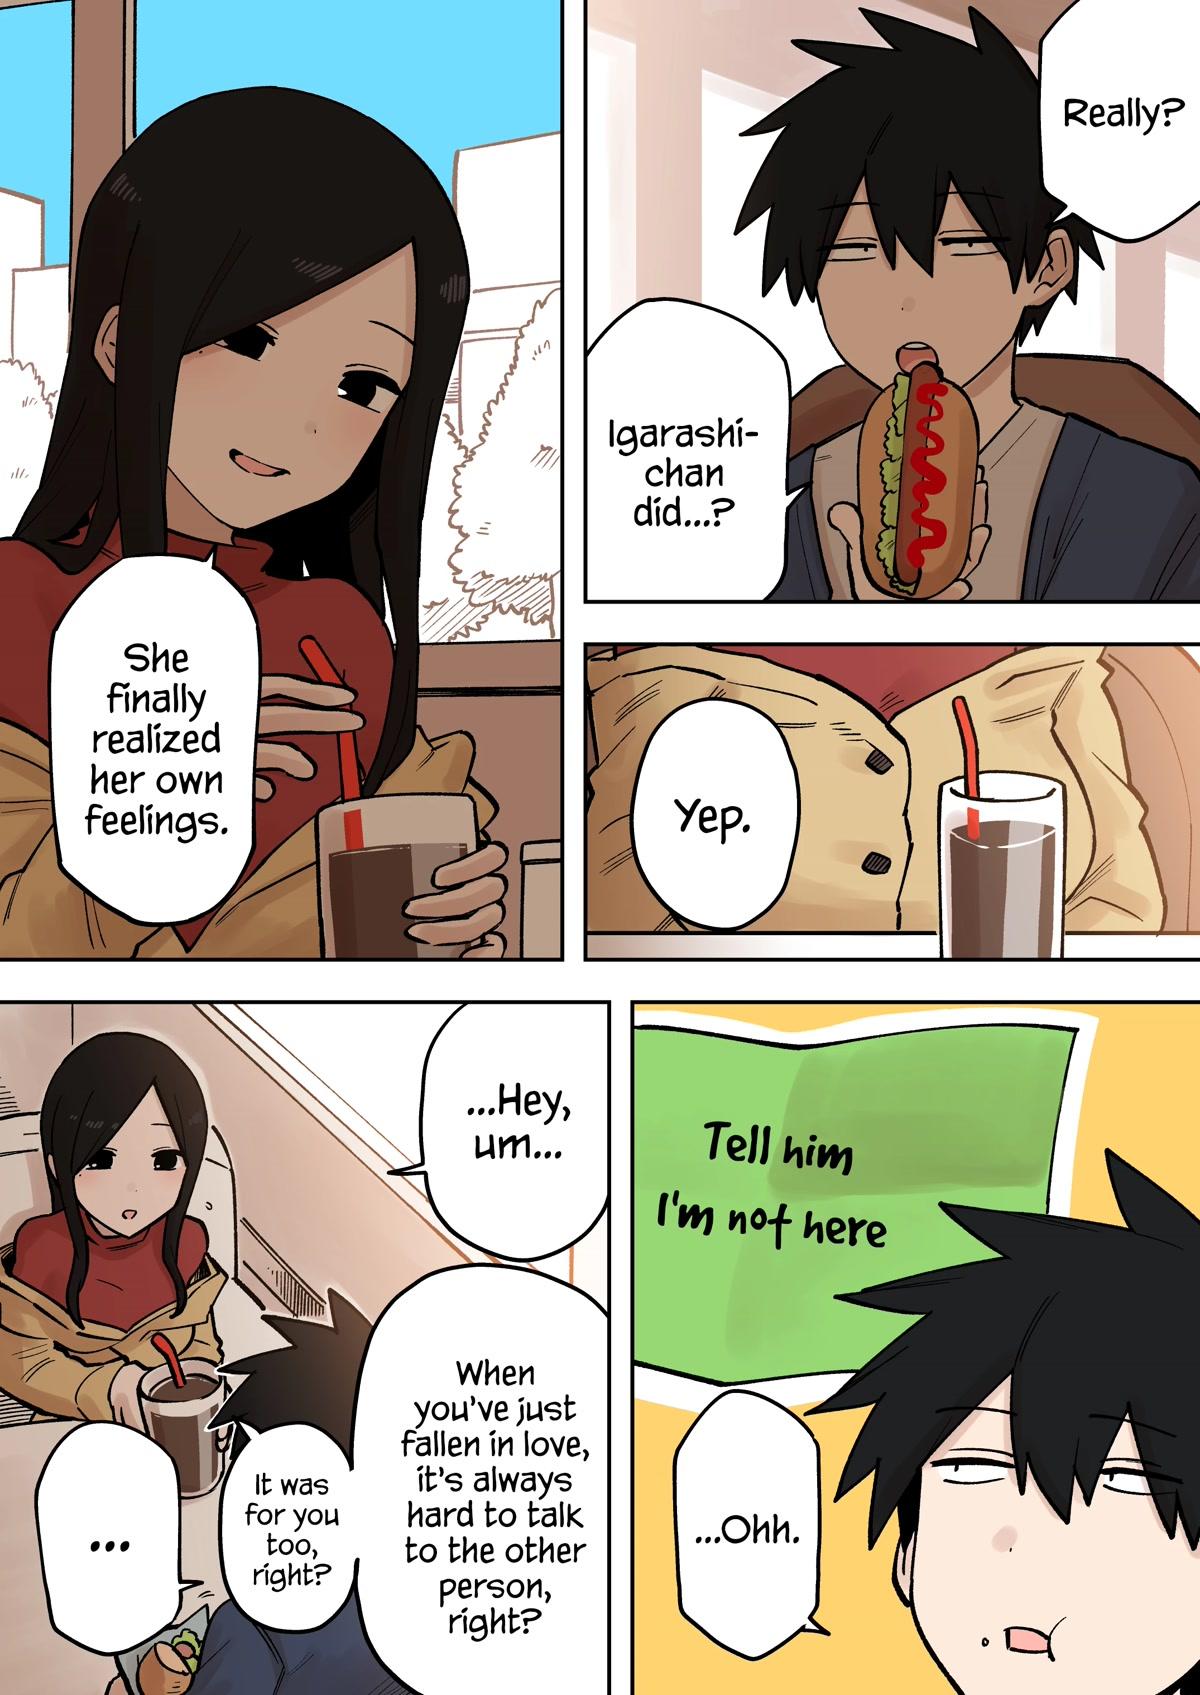 My Senpai is Annoying, Chapter 204 - My Senpai is Annoying Manga Online